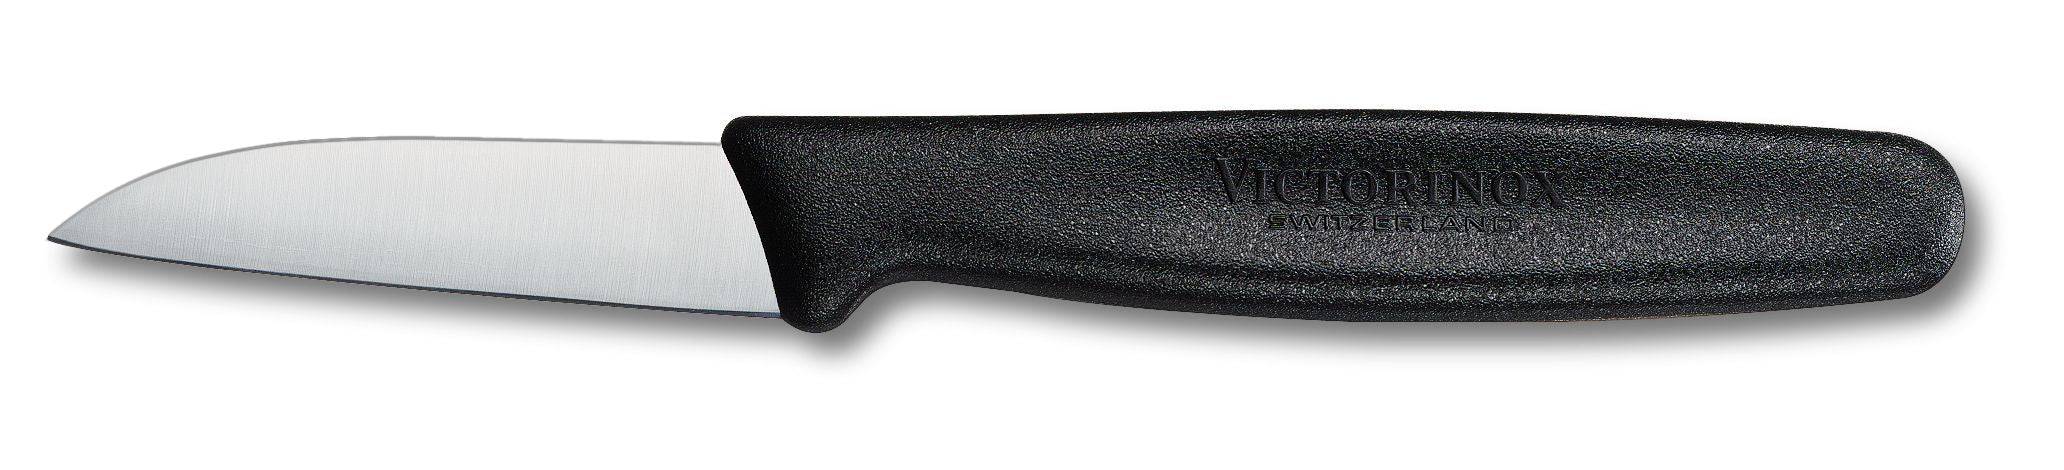 VICTORINOX STRAIGHT PARING KNIFE 6CM BLACK